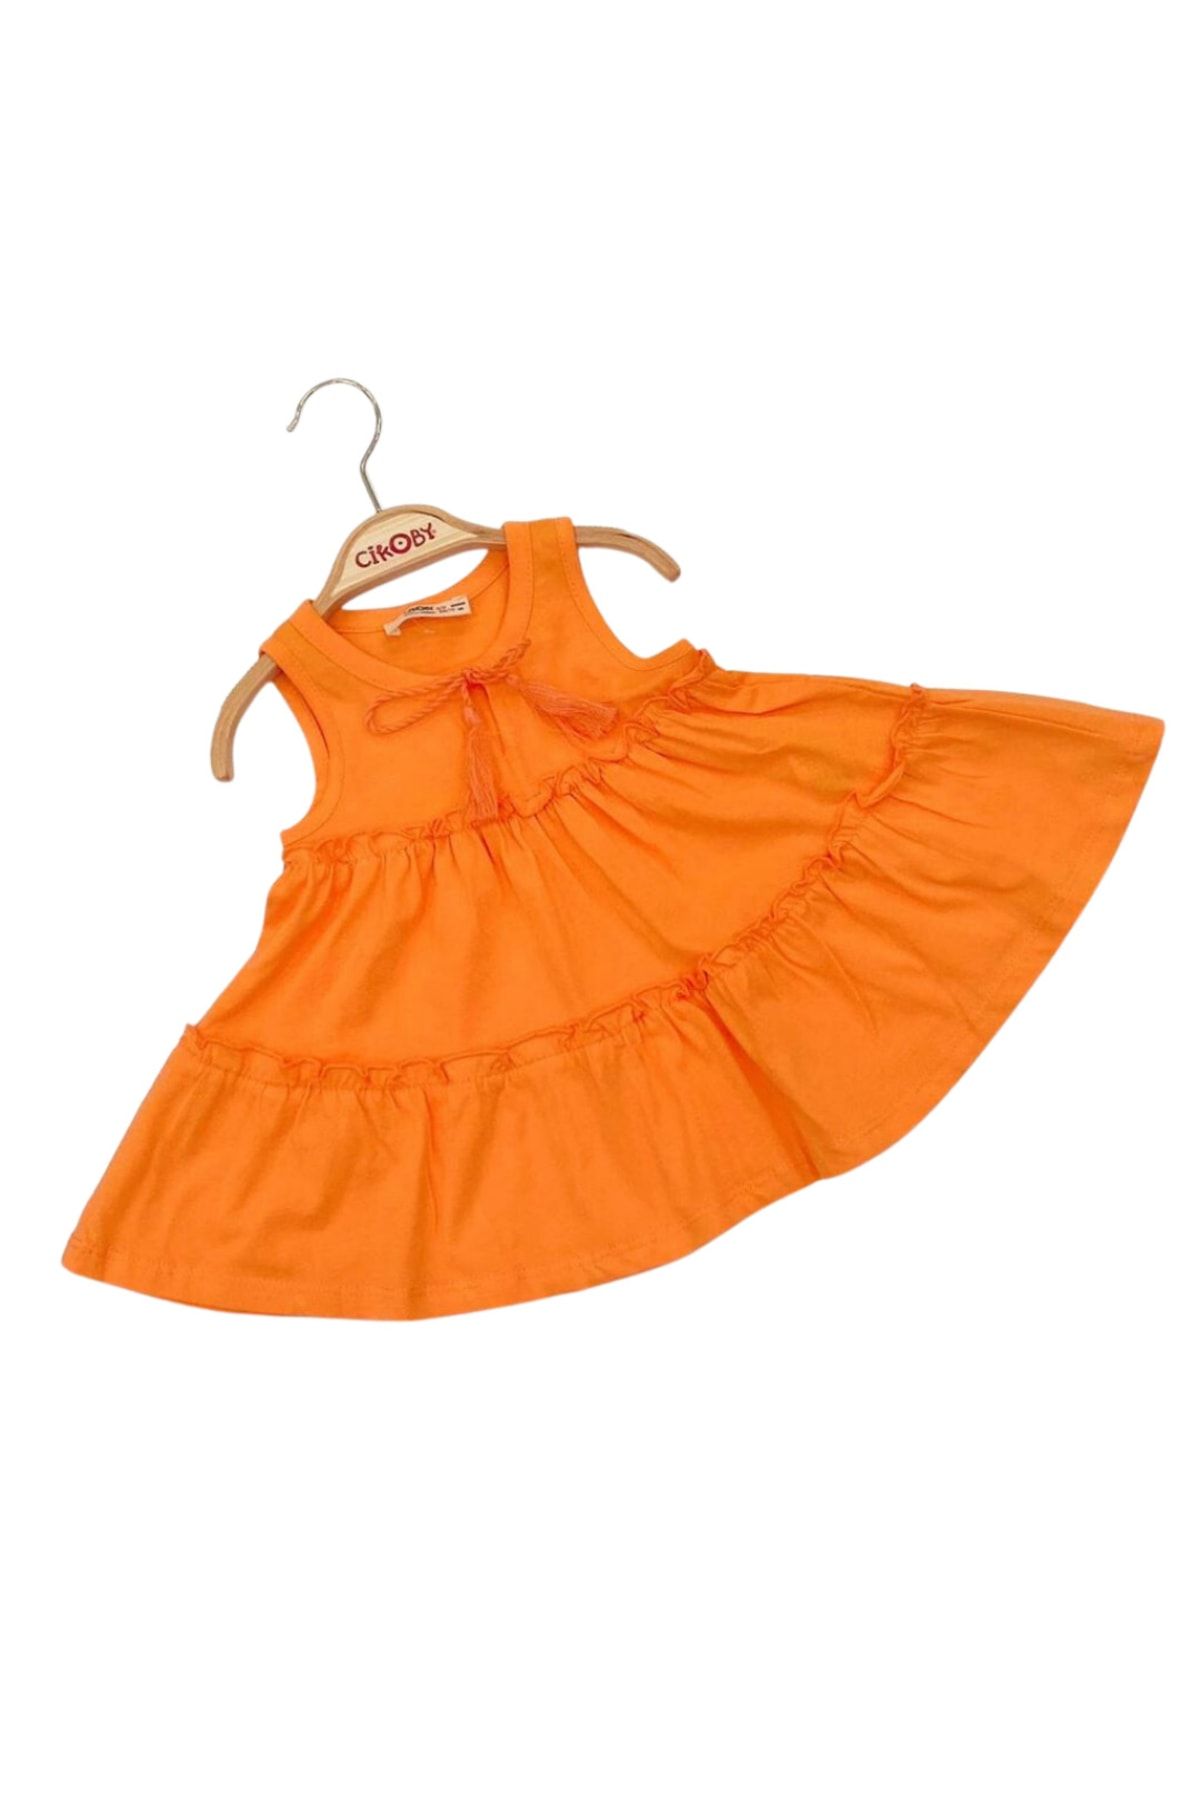 çikoby Kız Bebek Elbise Oranj